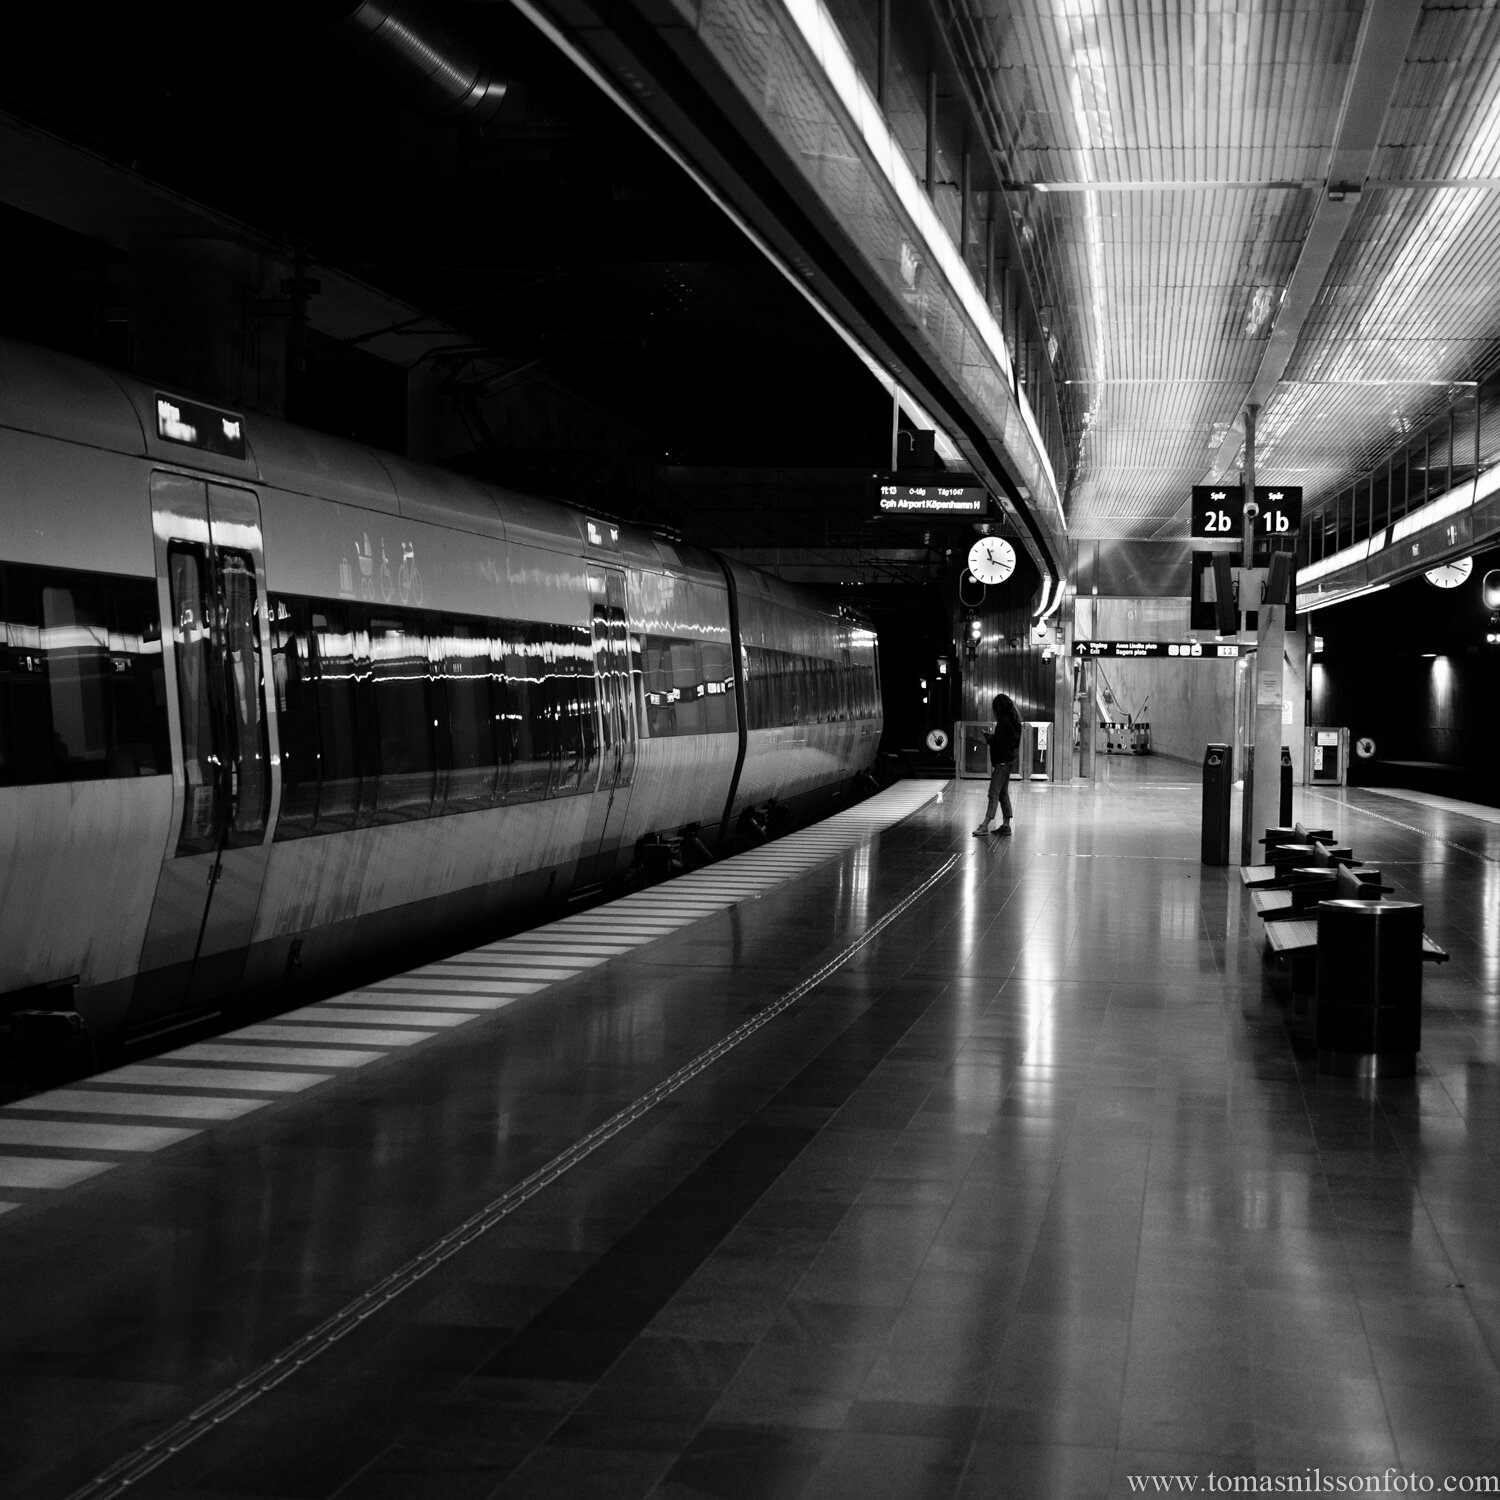 Day 236 - August 24: Alone on Platform 2b